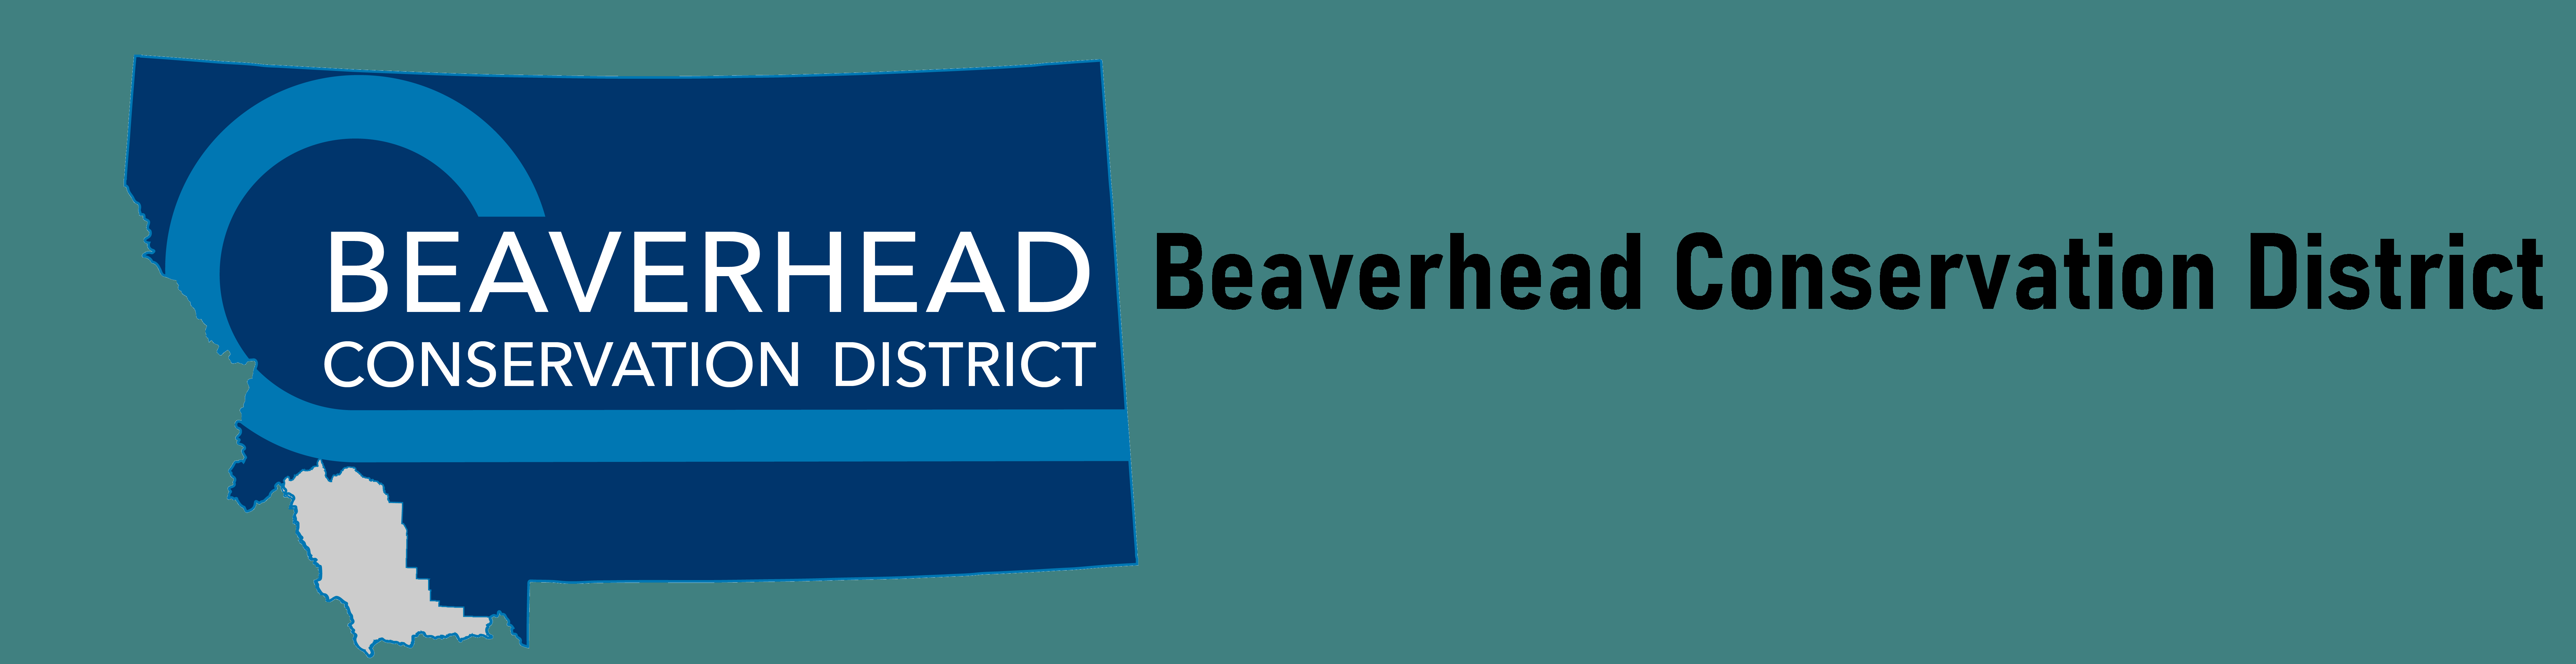 Beaverhead Conservation District